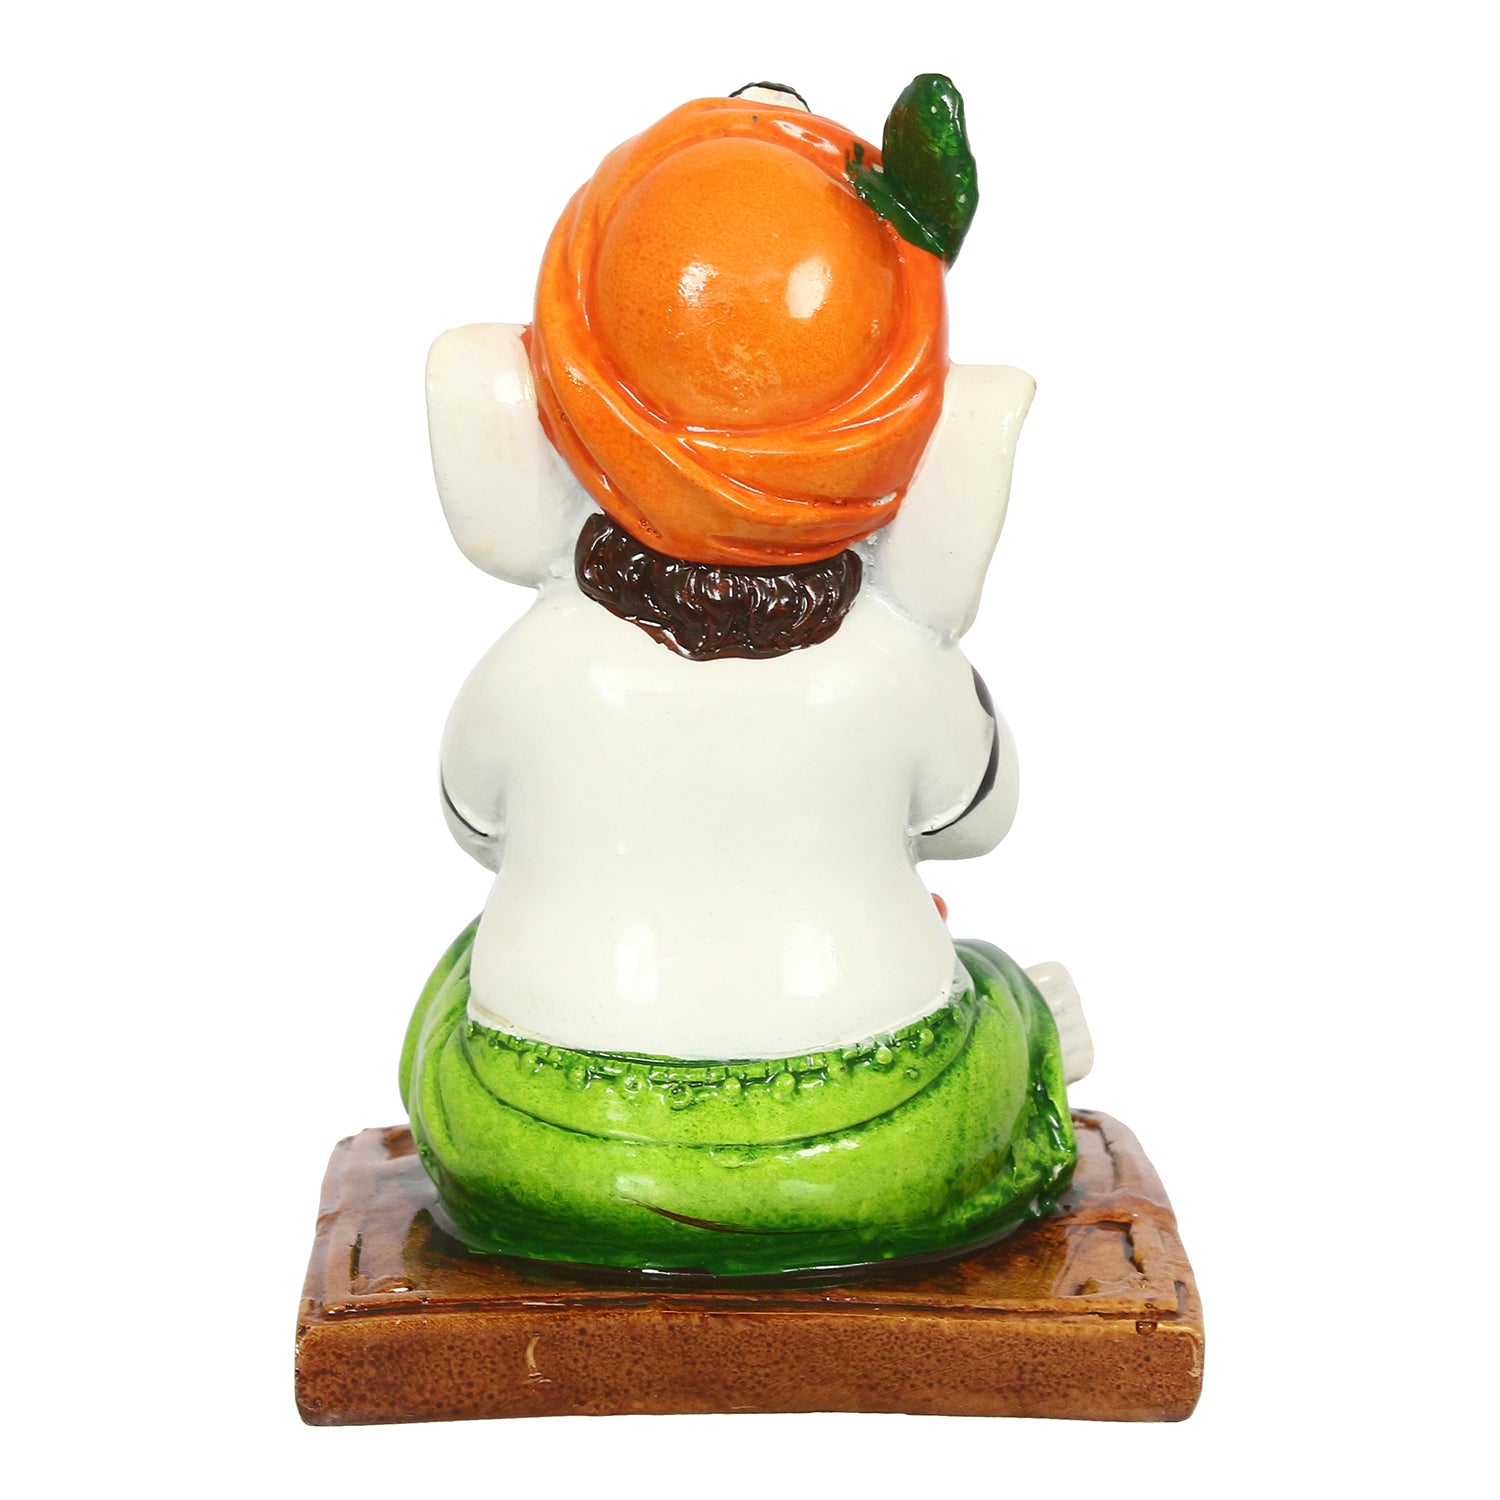 Decorative Polyresin Lord Ganesha Idol eating Ladoo in Lord Krishna Avatar (White, Orange, Green) 6